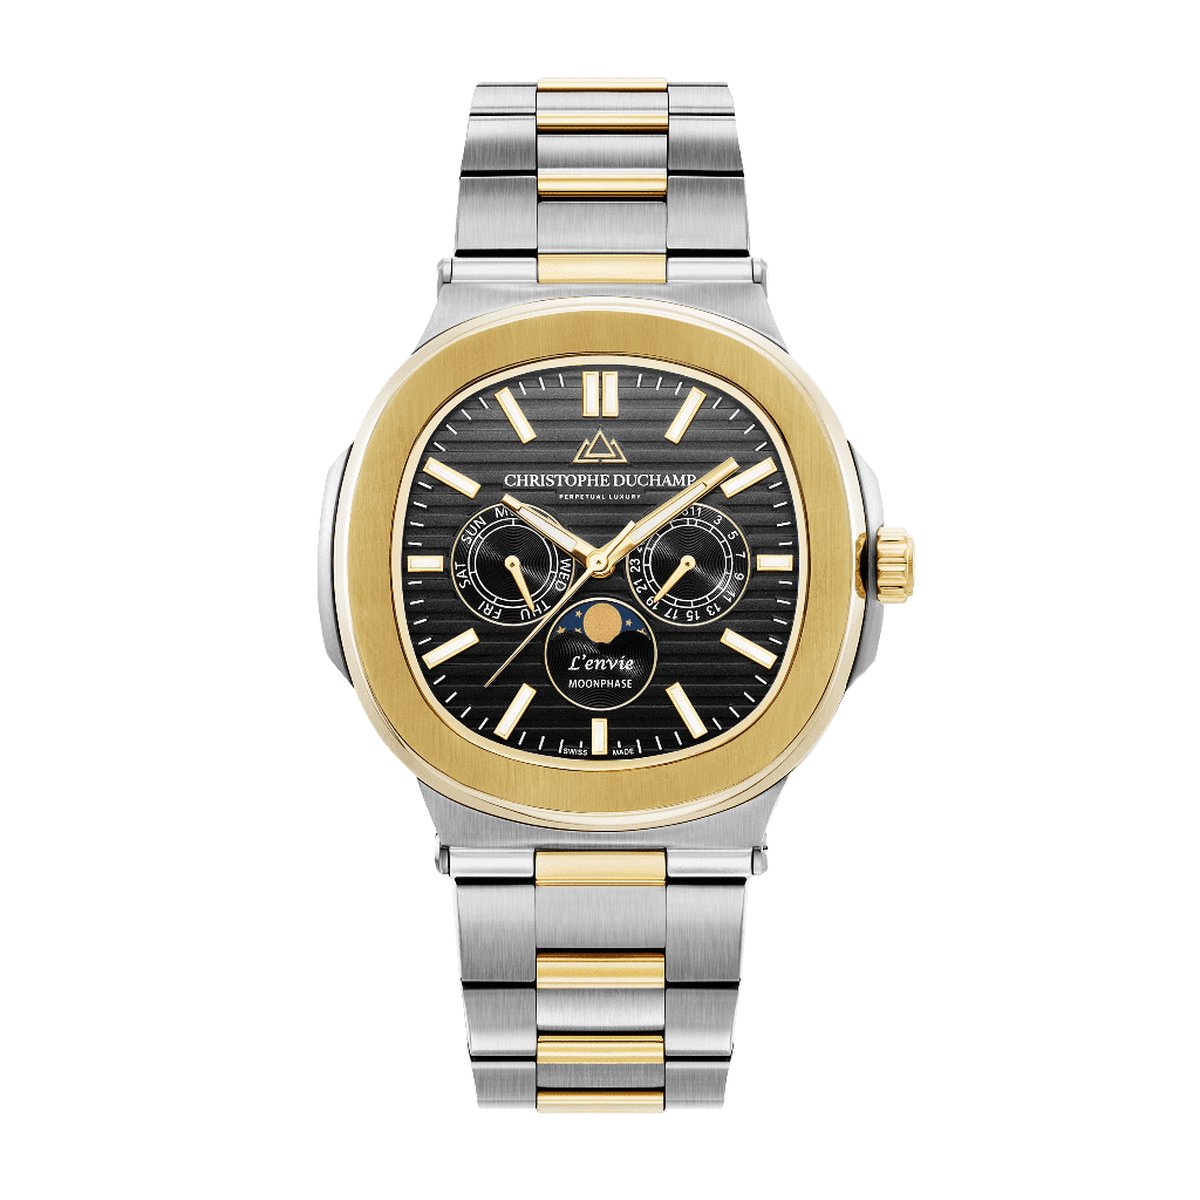 Luxe horloge | Christophe Duchamp | L'envie Moonphase Gold-Black